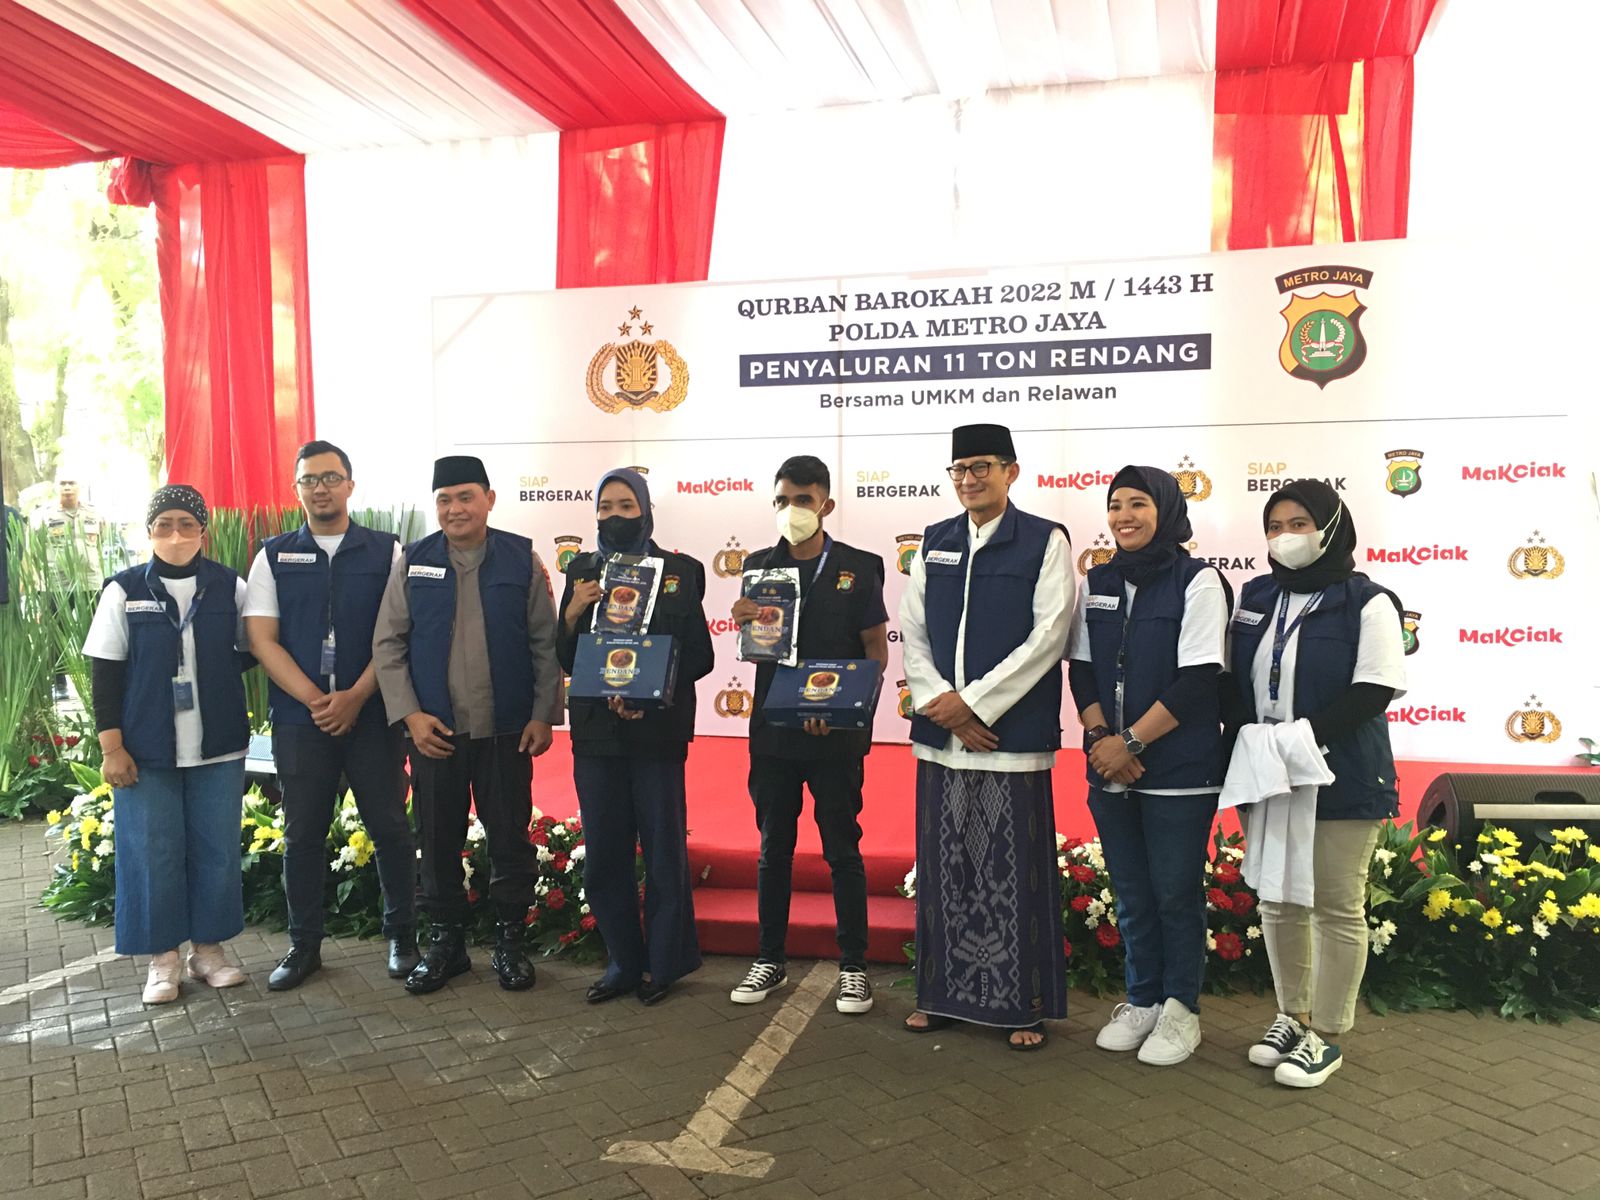 Program Qurban Barokah Sukses, Polda Metro Jaya Salurkan 11 Ton Paket Daging Rendang ke Masyarakat